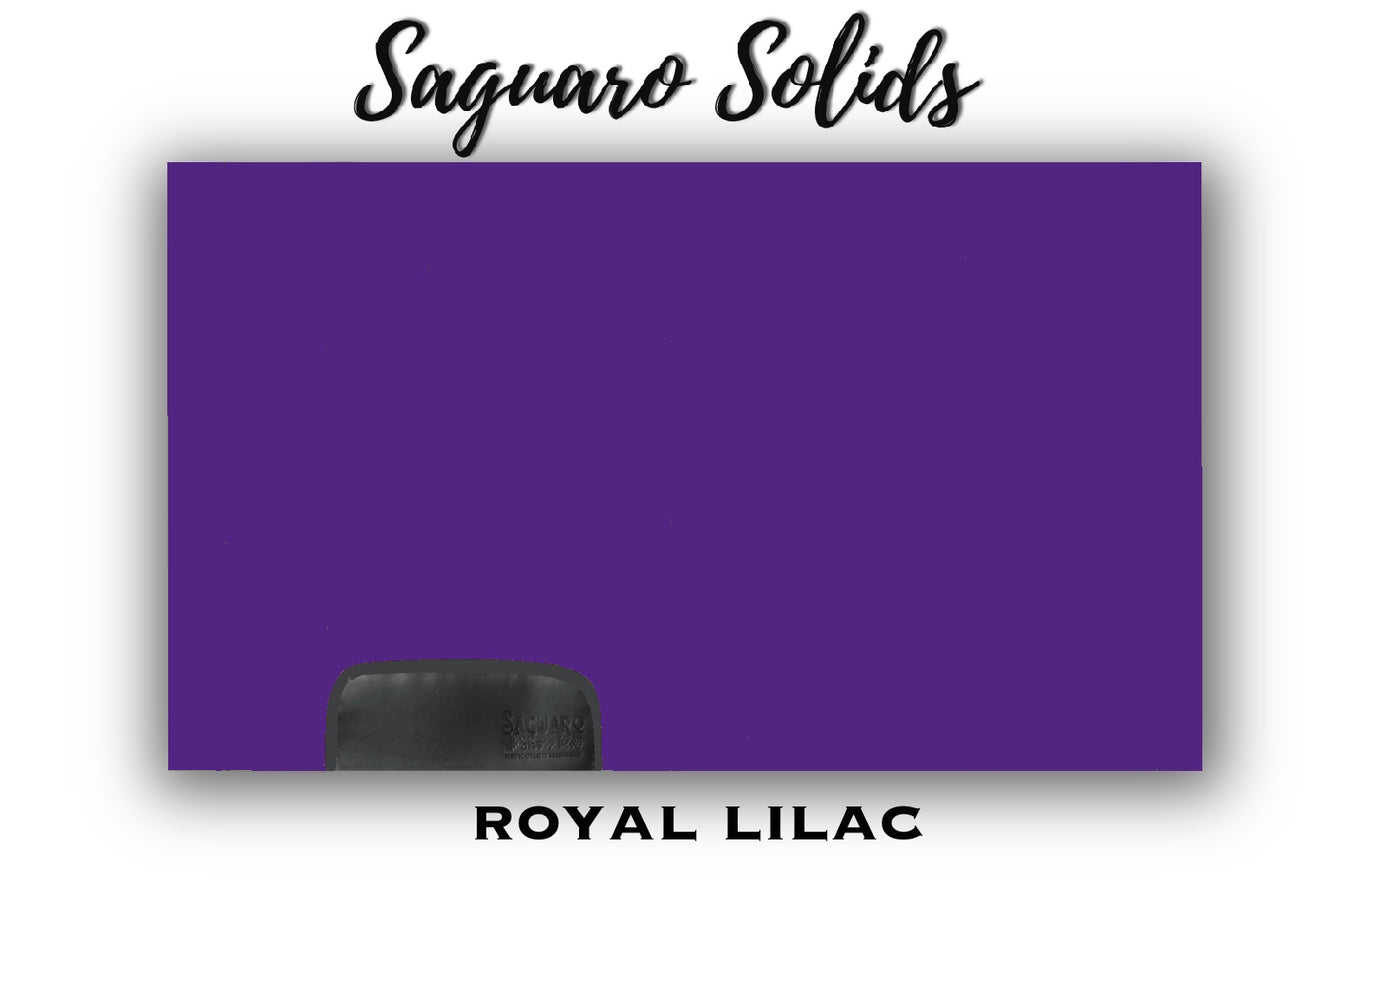 Saguaro Solid "Royal Lilac" Show Pad (SEMI-CUSTOM)